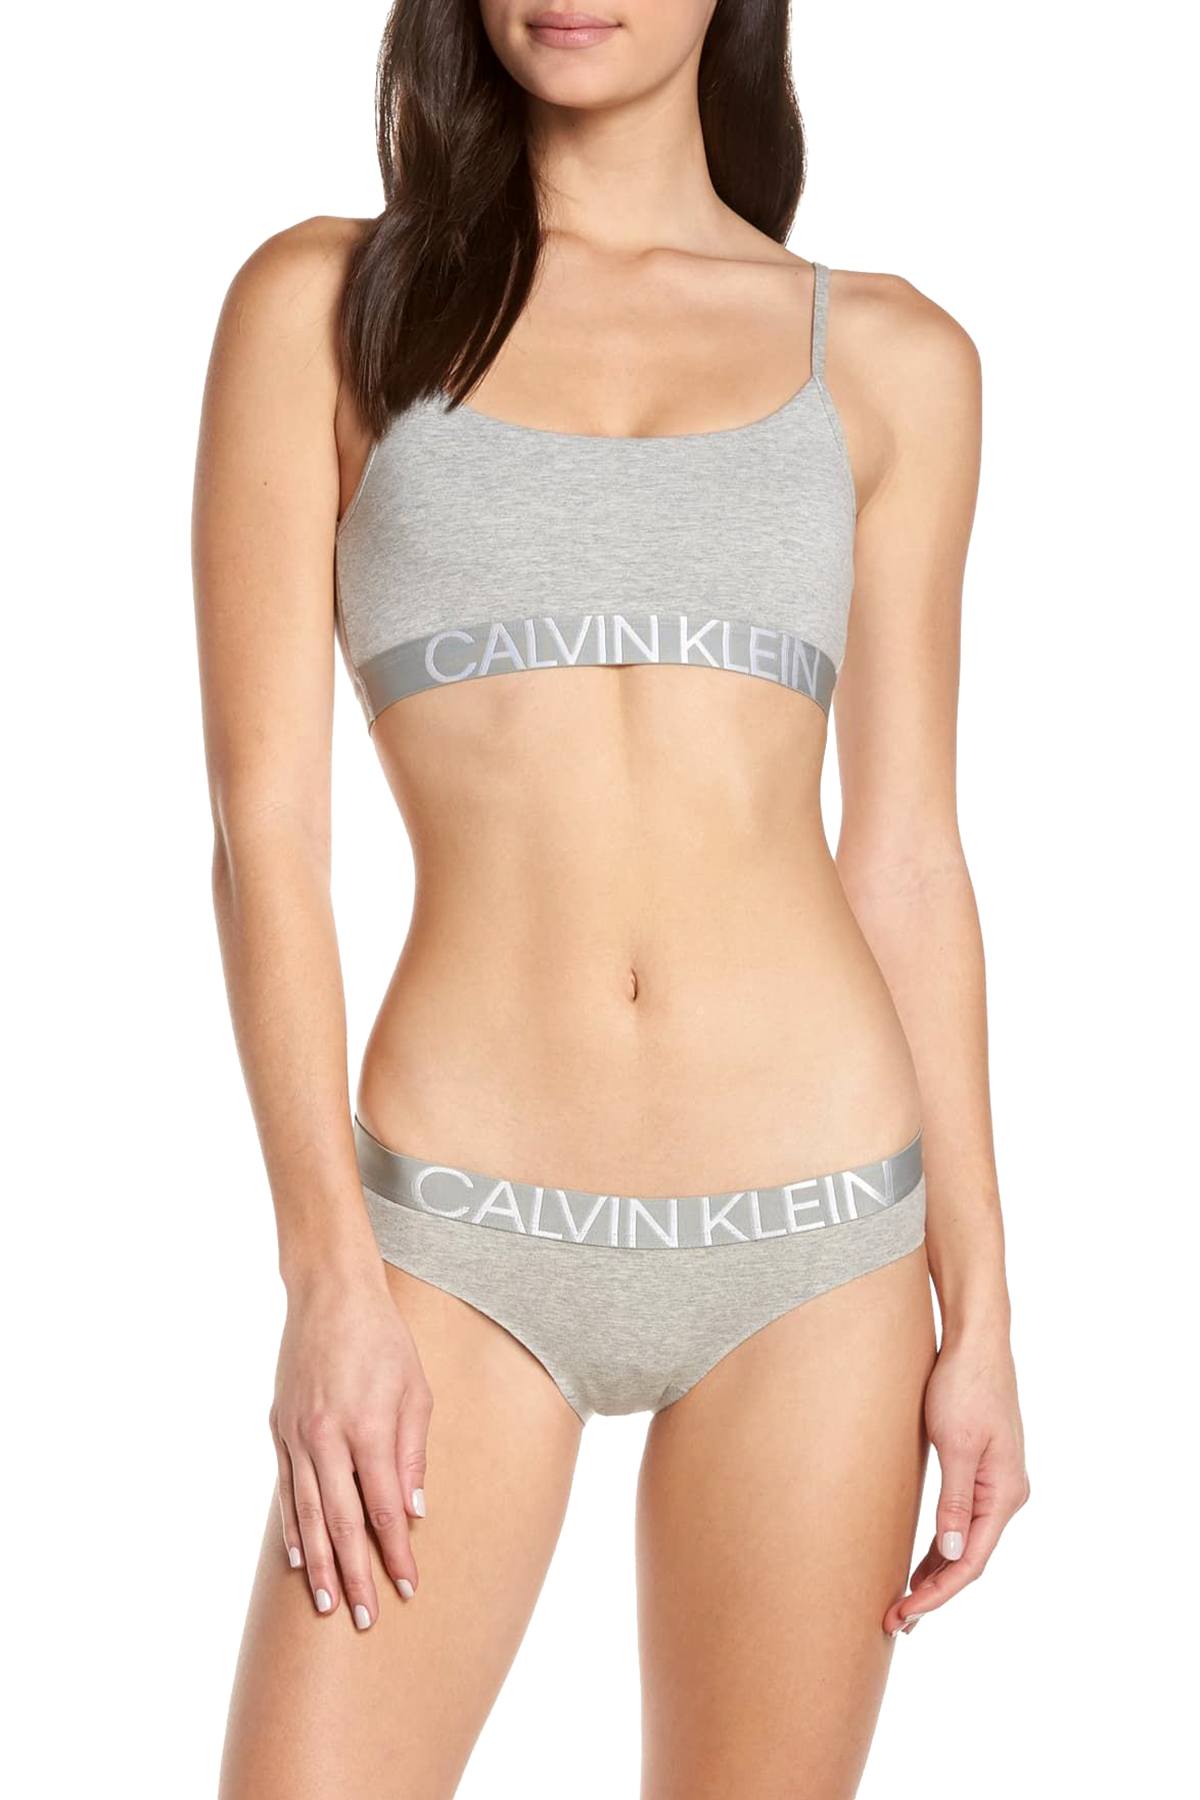 Calvin Klein Heather Grey Statement 1981 Cotton Bikini